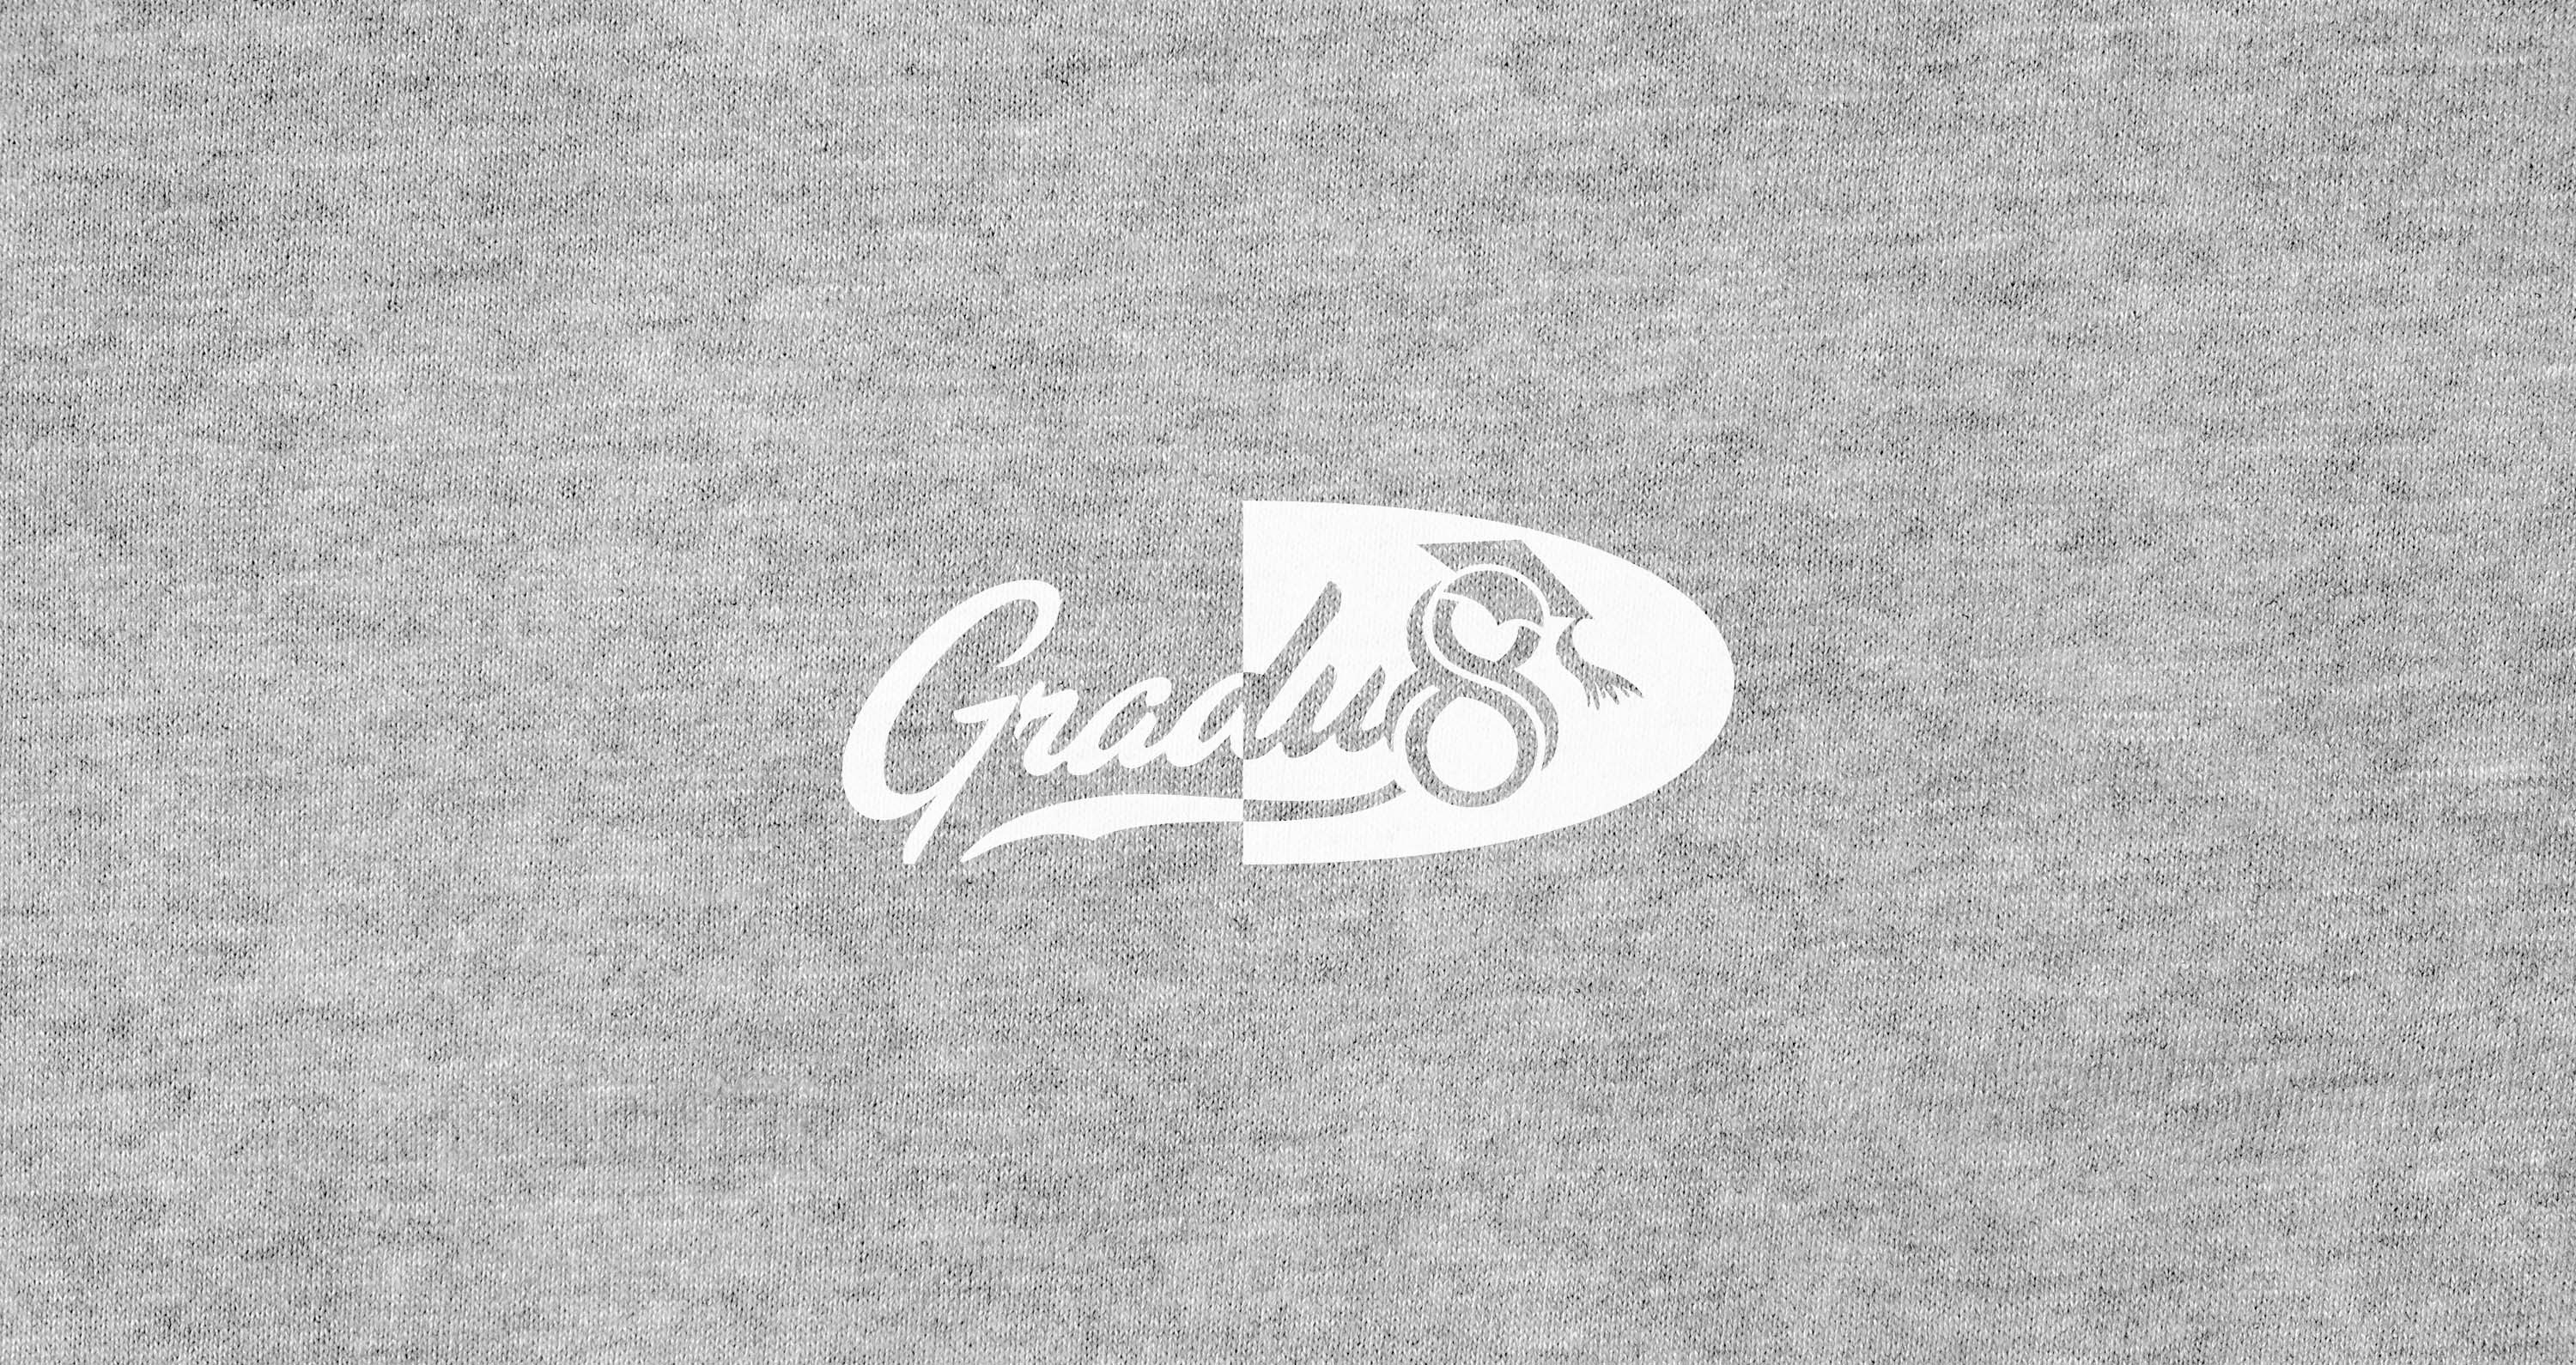 Gradu8 BnB Anniversary Premium Hoodie - Heather Grey